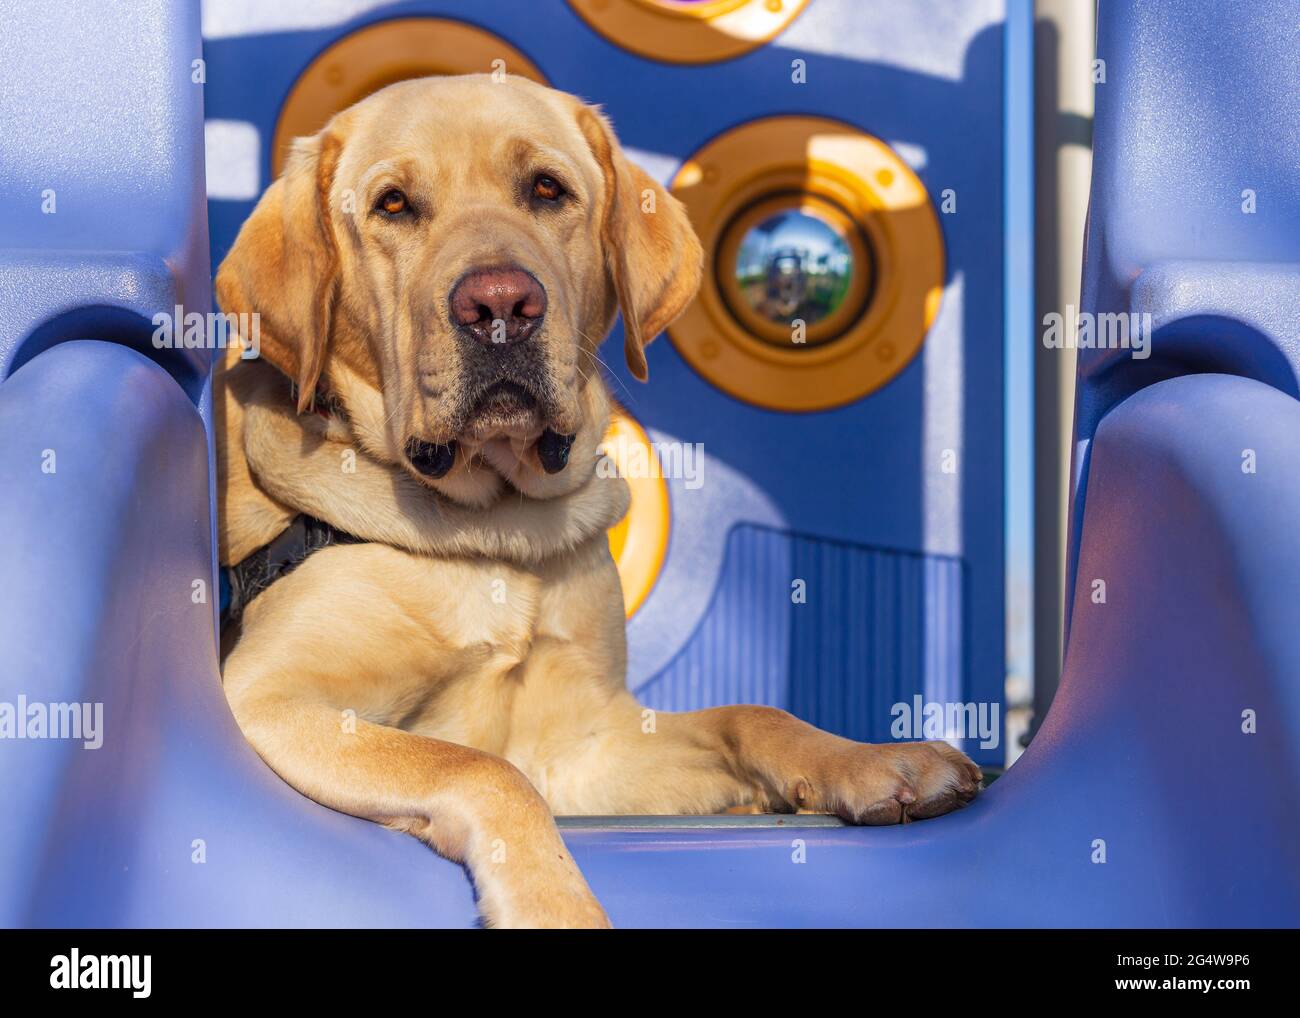 Yellow labrador retriever lays on colorful children's playground equipment Stock Photo